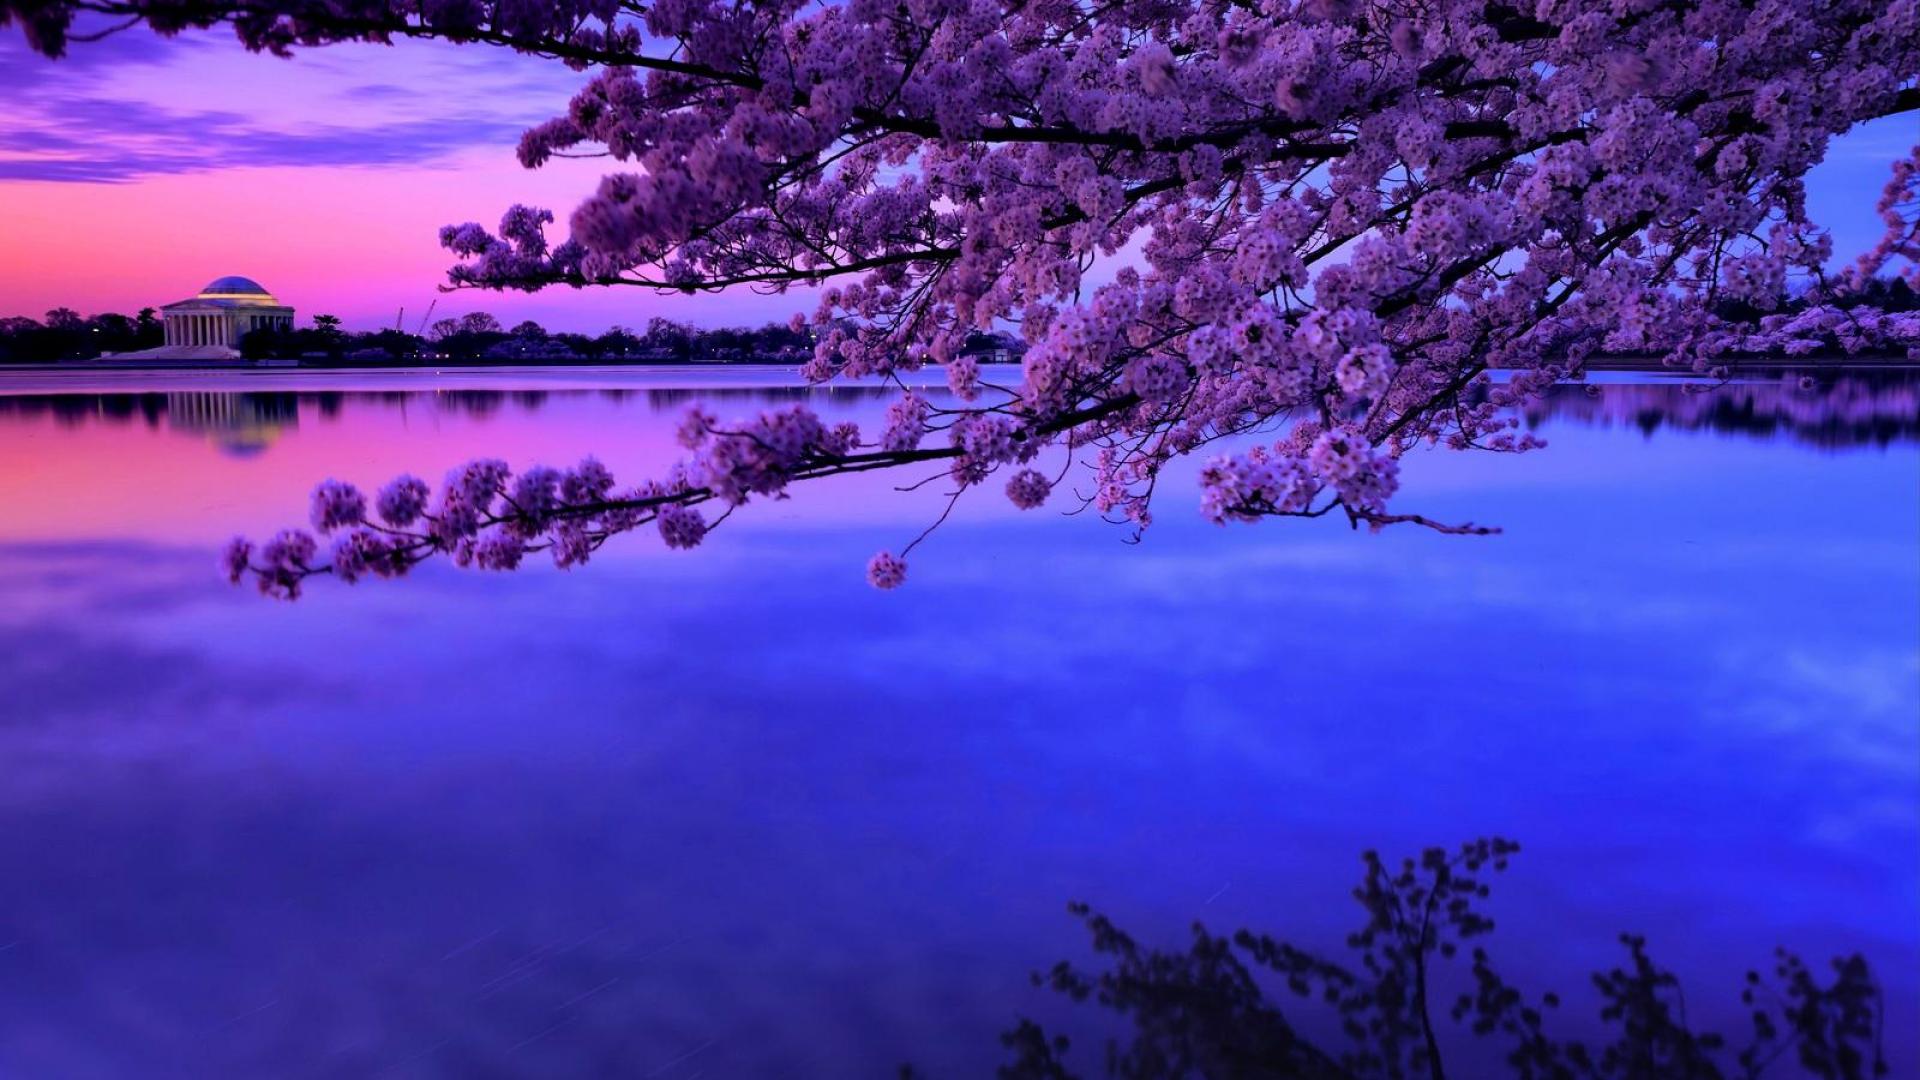 Cherry Blossom Desktop Background